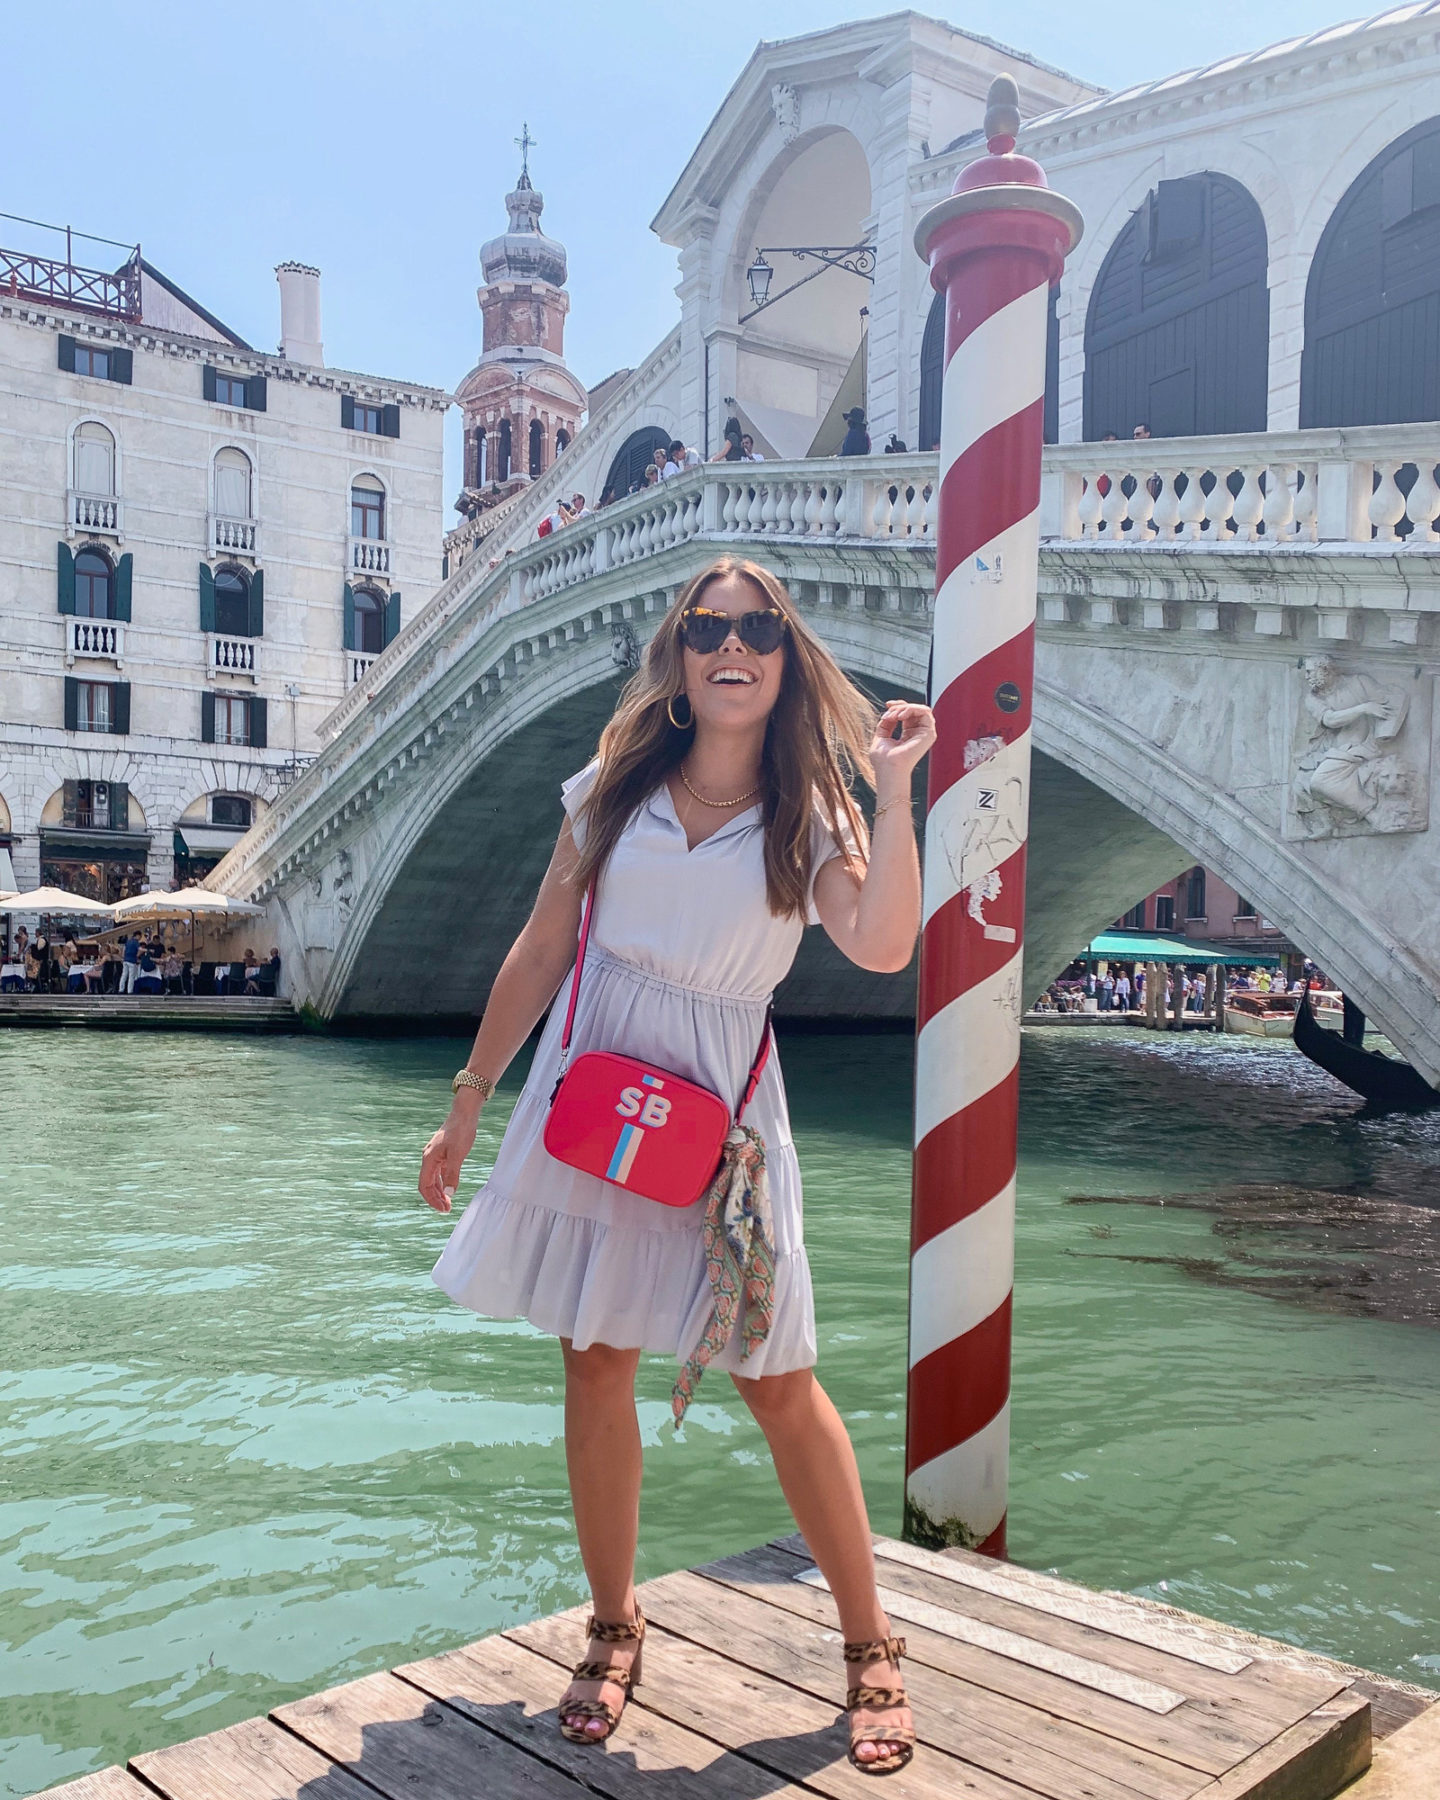 Rialto Bridge Venice Italy